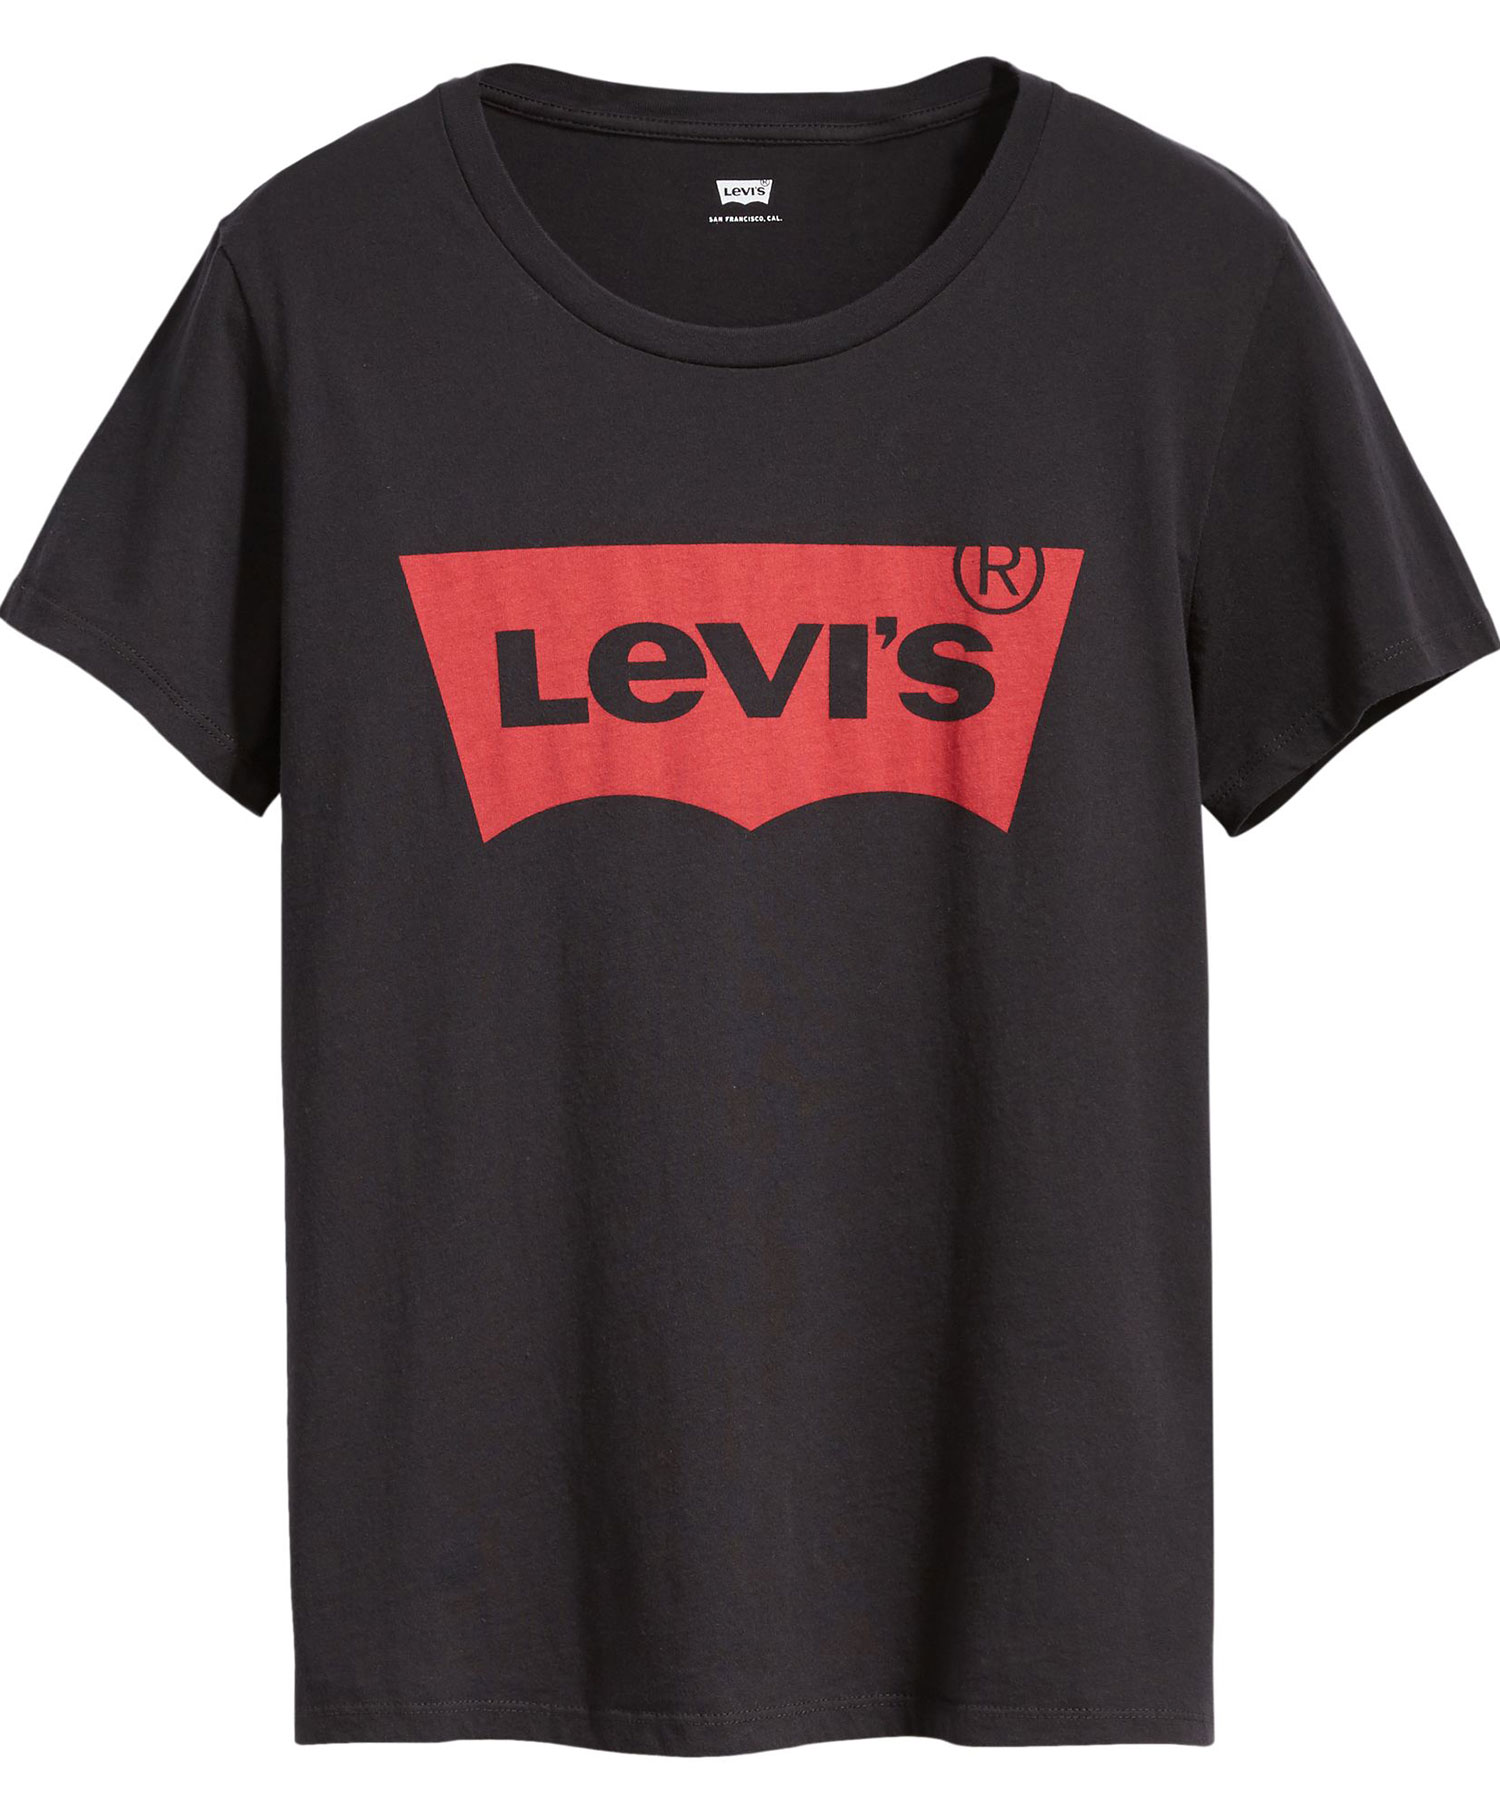 Levi's Perfect Logo tee